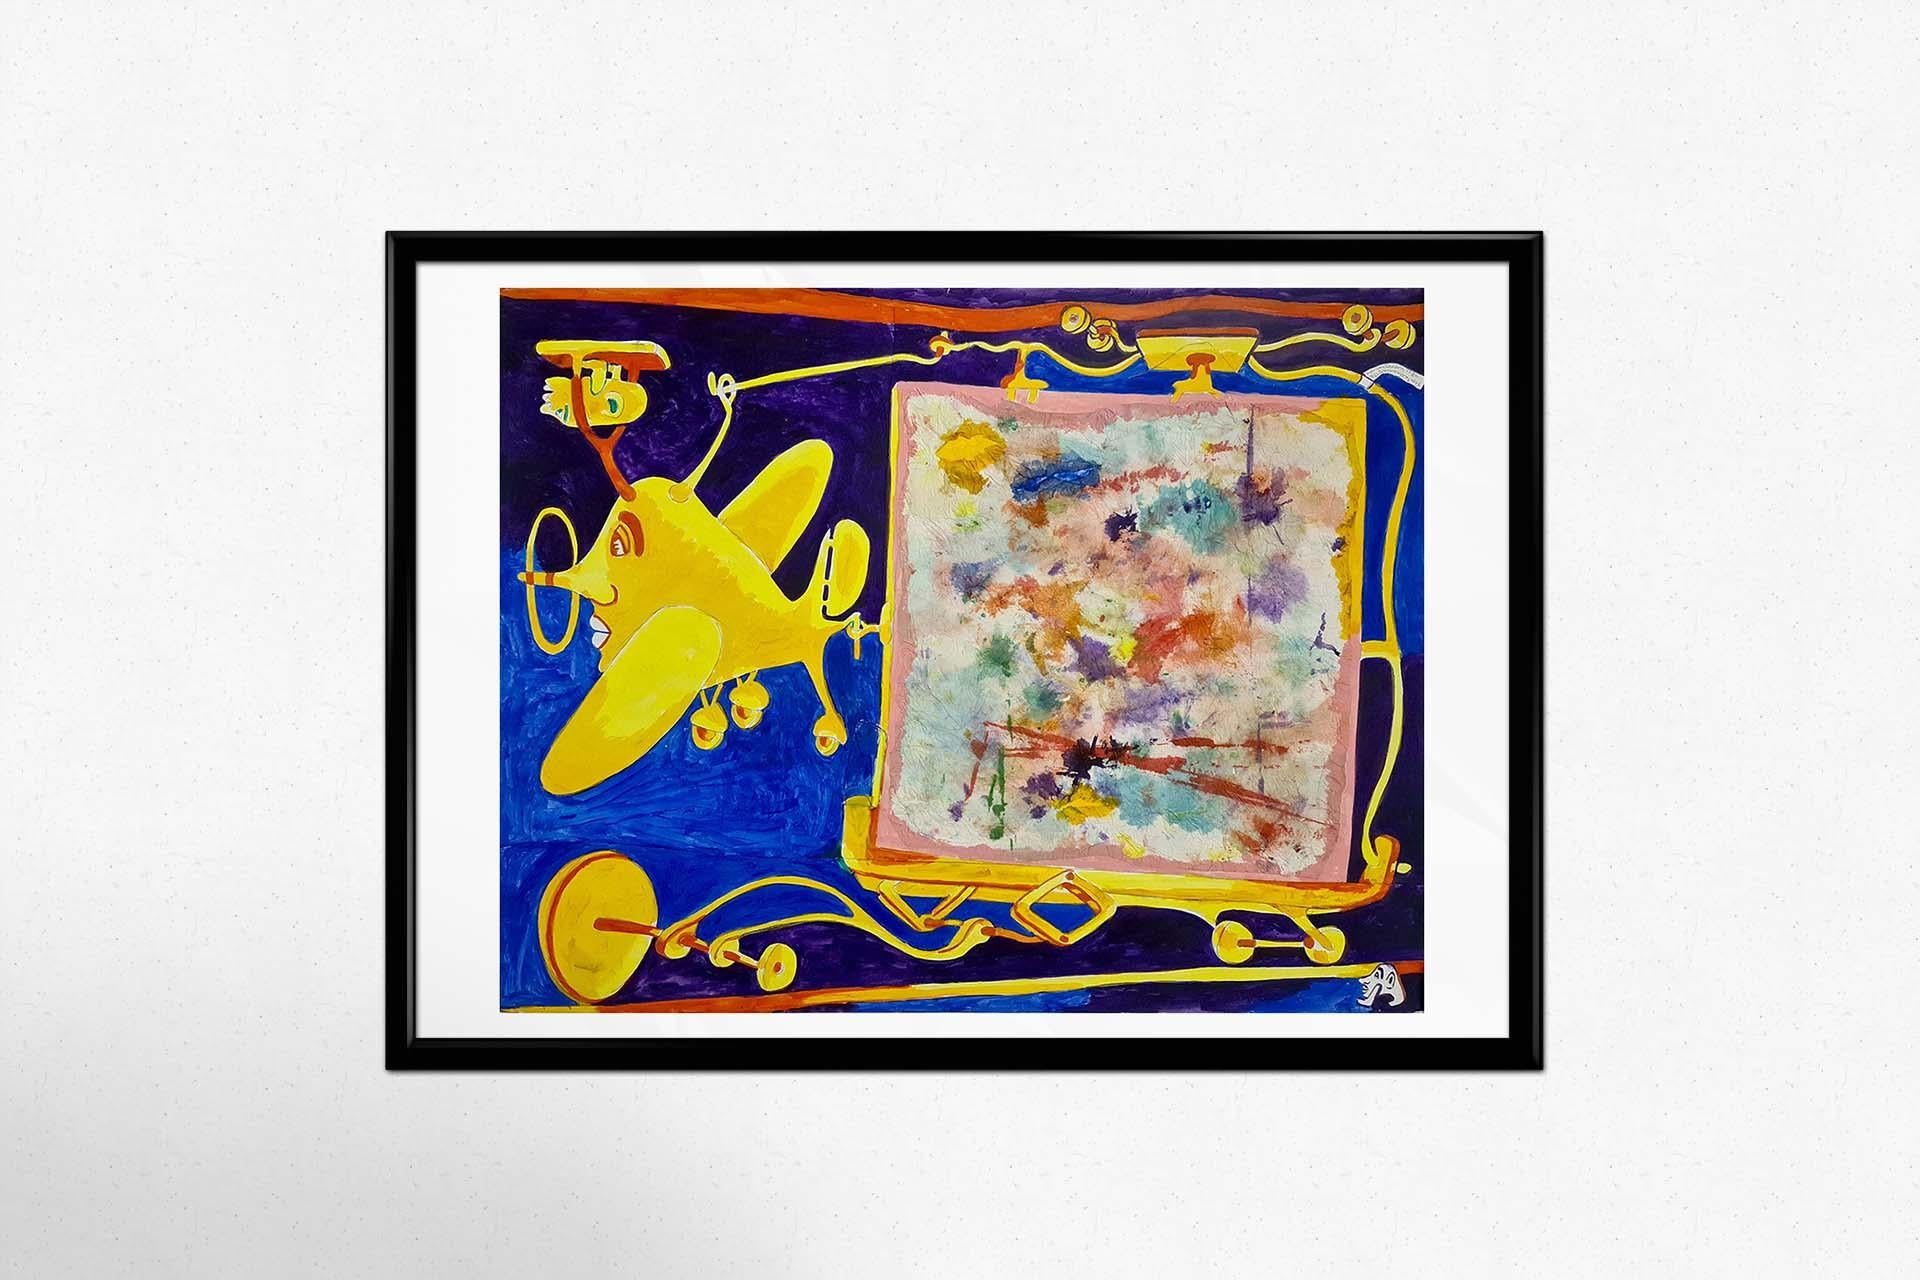 Original work of Yvon Taillandier Galerie L'oeil de boeuf  Transport de Tabastre For Sale 3